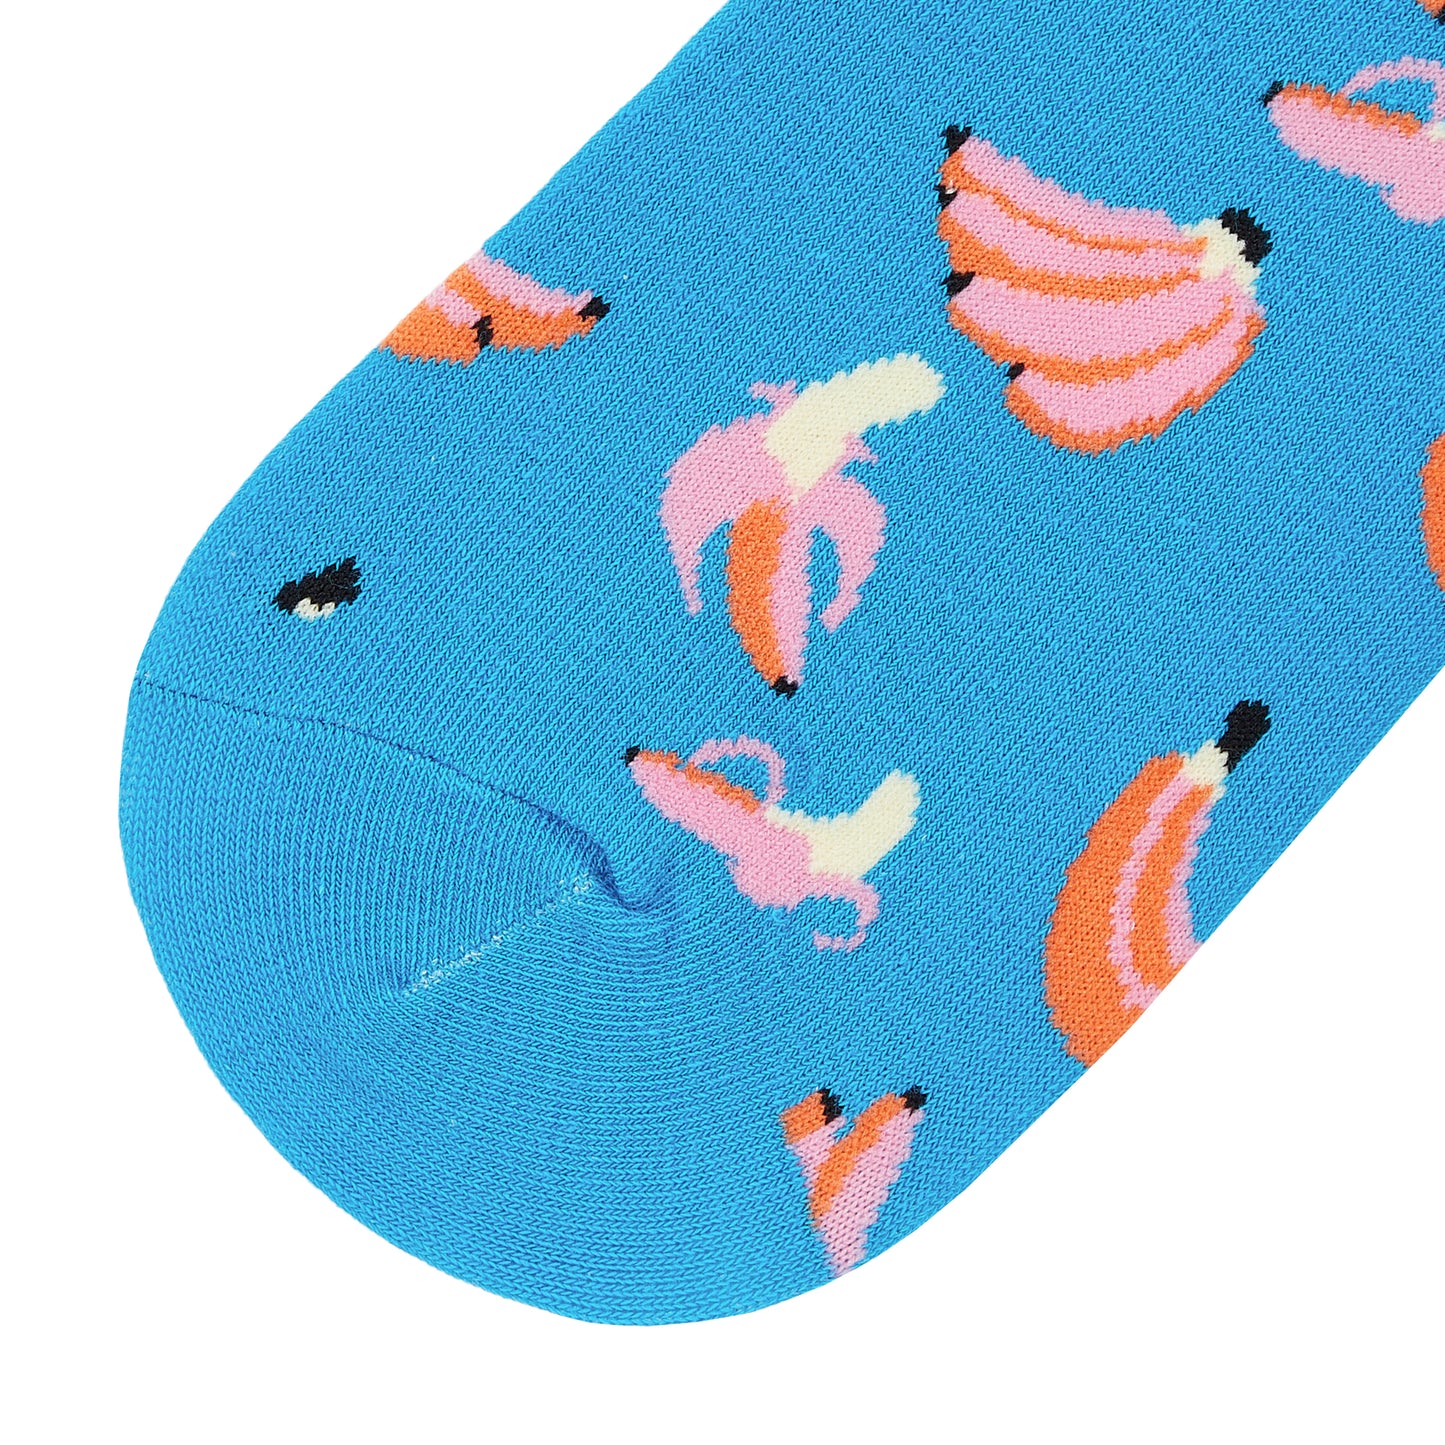 Pink Banana Printed Mid-Calf Length Socks - IDENTITY Apparel Shop